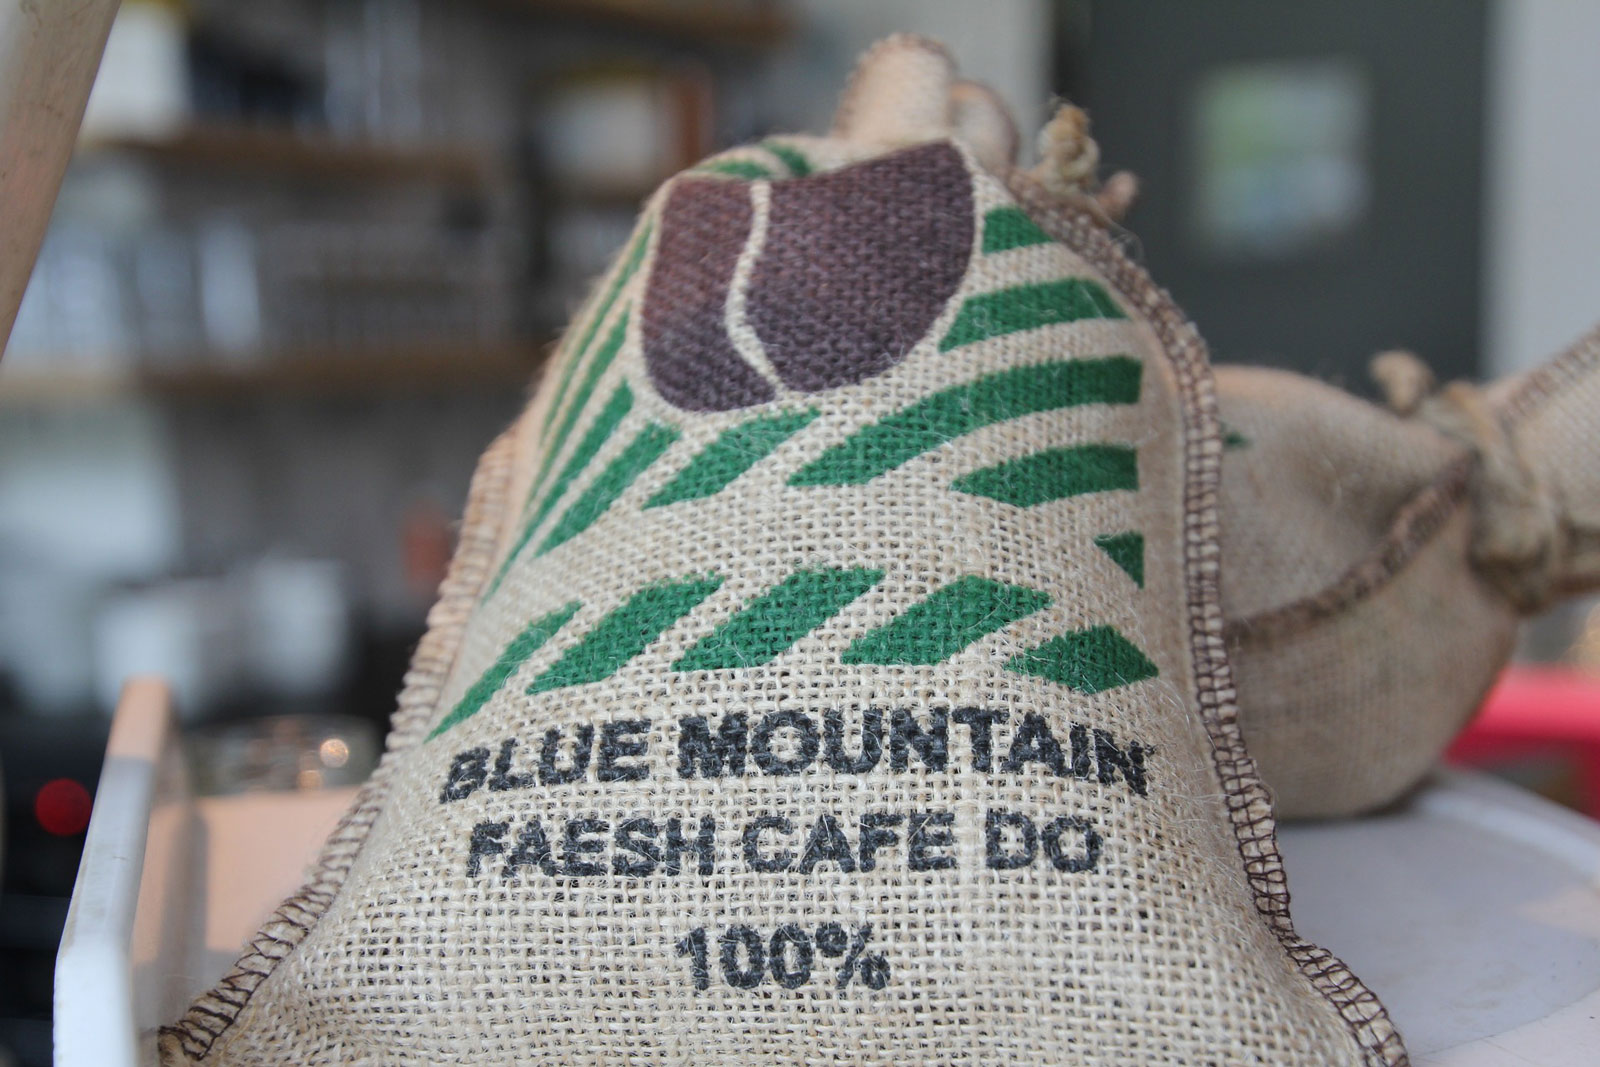 Blue Mountain coffee in Jamaica